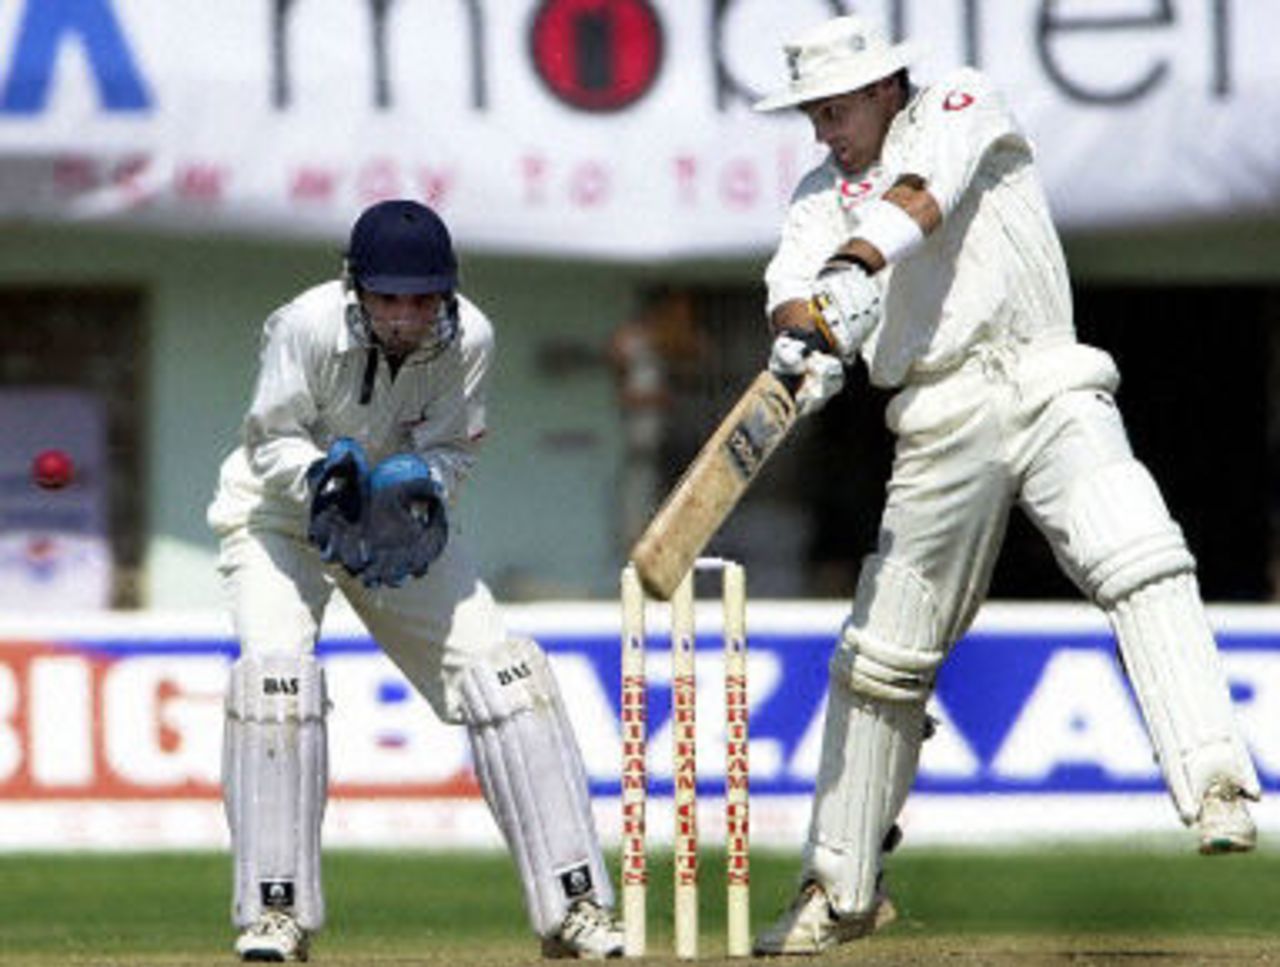 Indian Board President's XI v England XI, Lal Bahadur Shastri Stadium, Hyderabad, Deccan, 22 - 24 November 2001